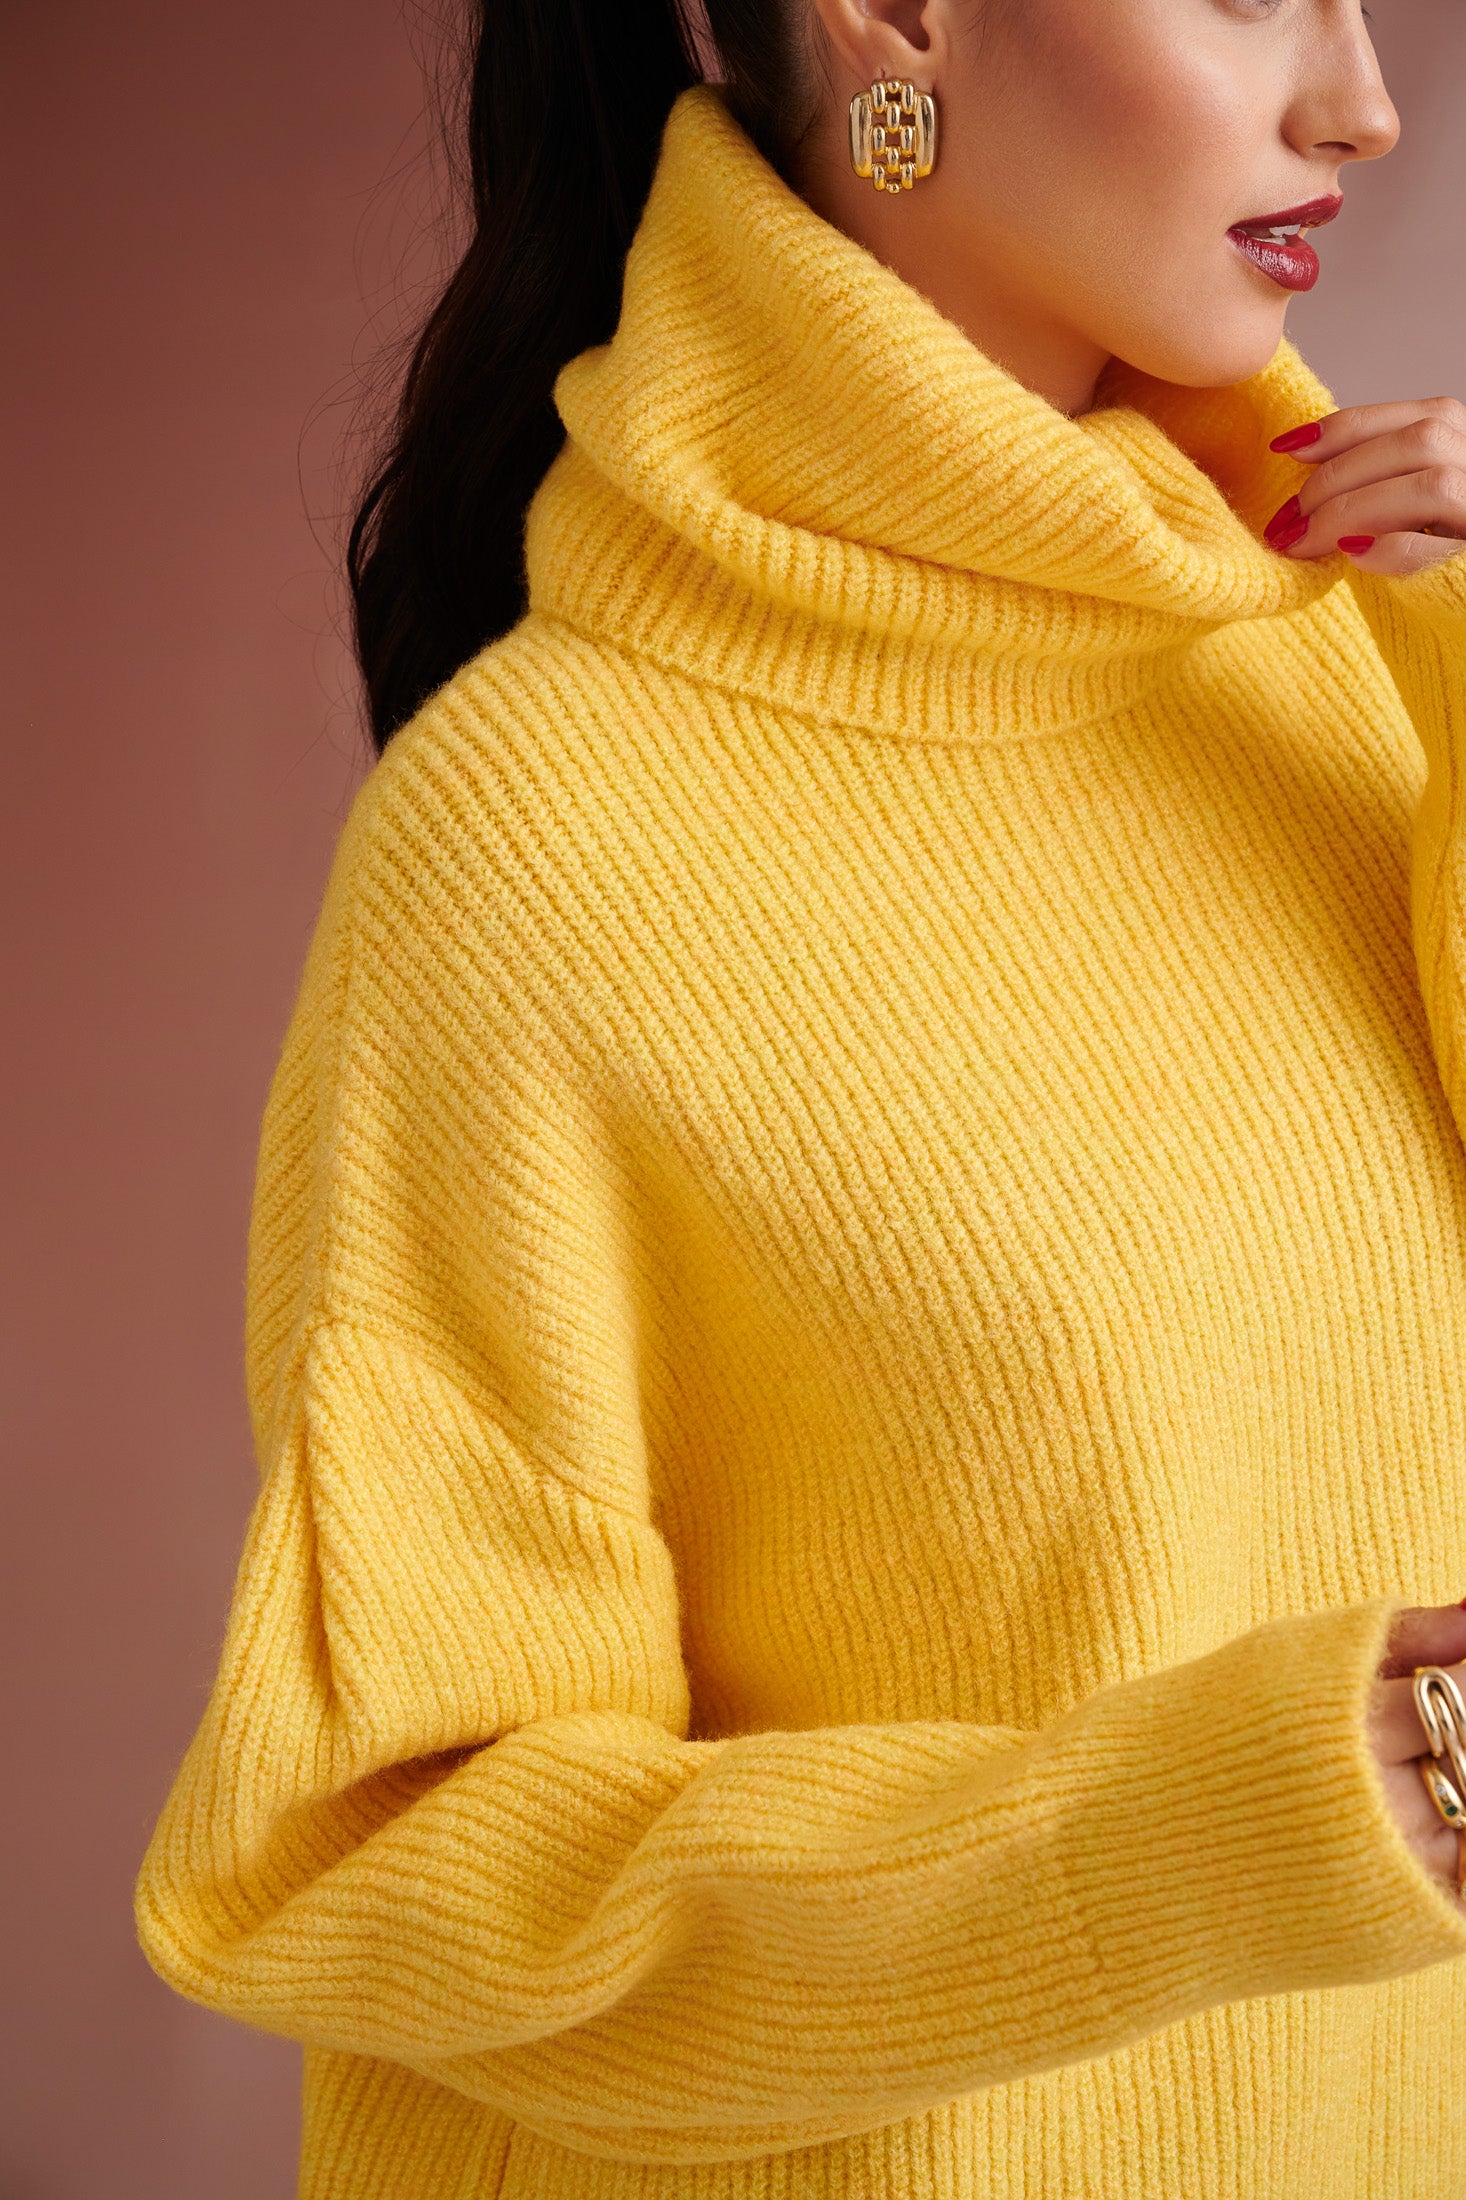 Karavan Penny Sweater Yellow